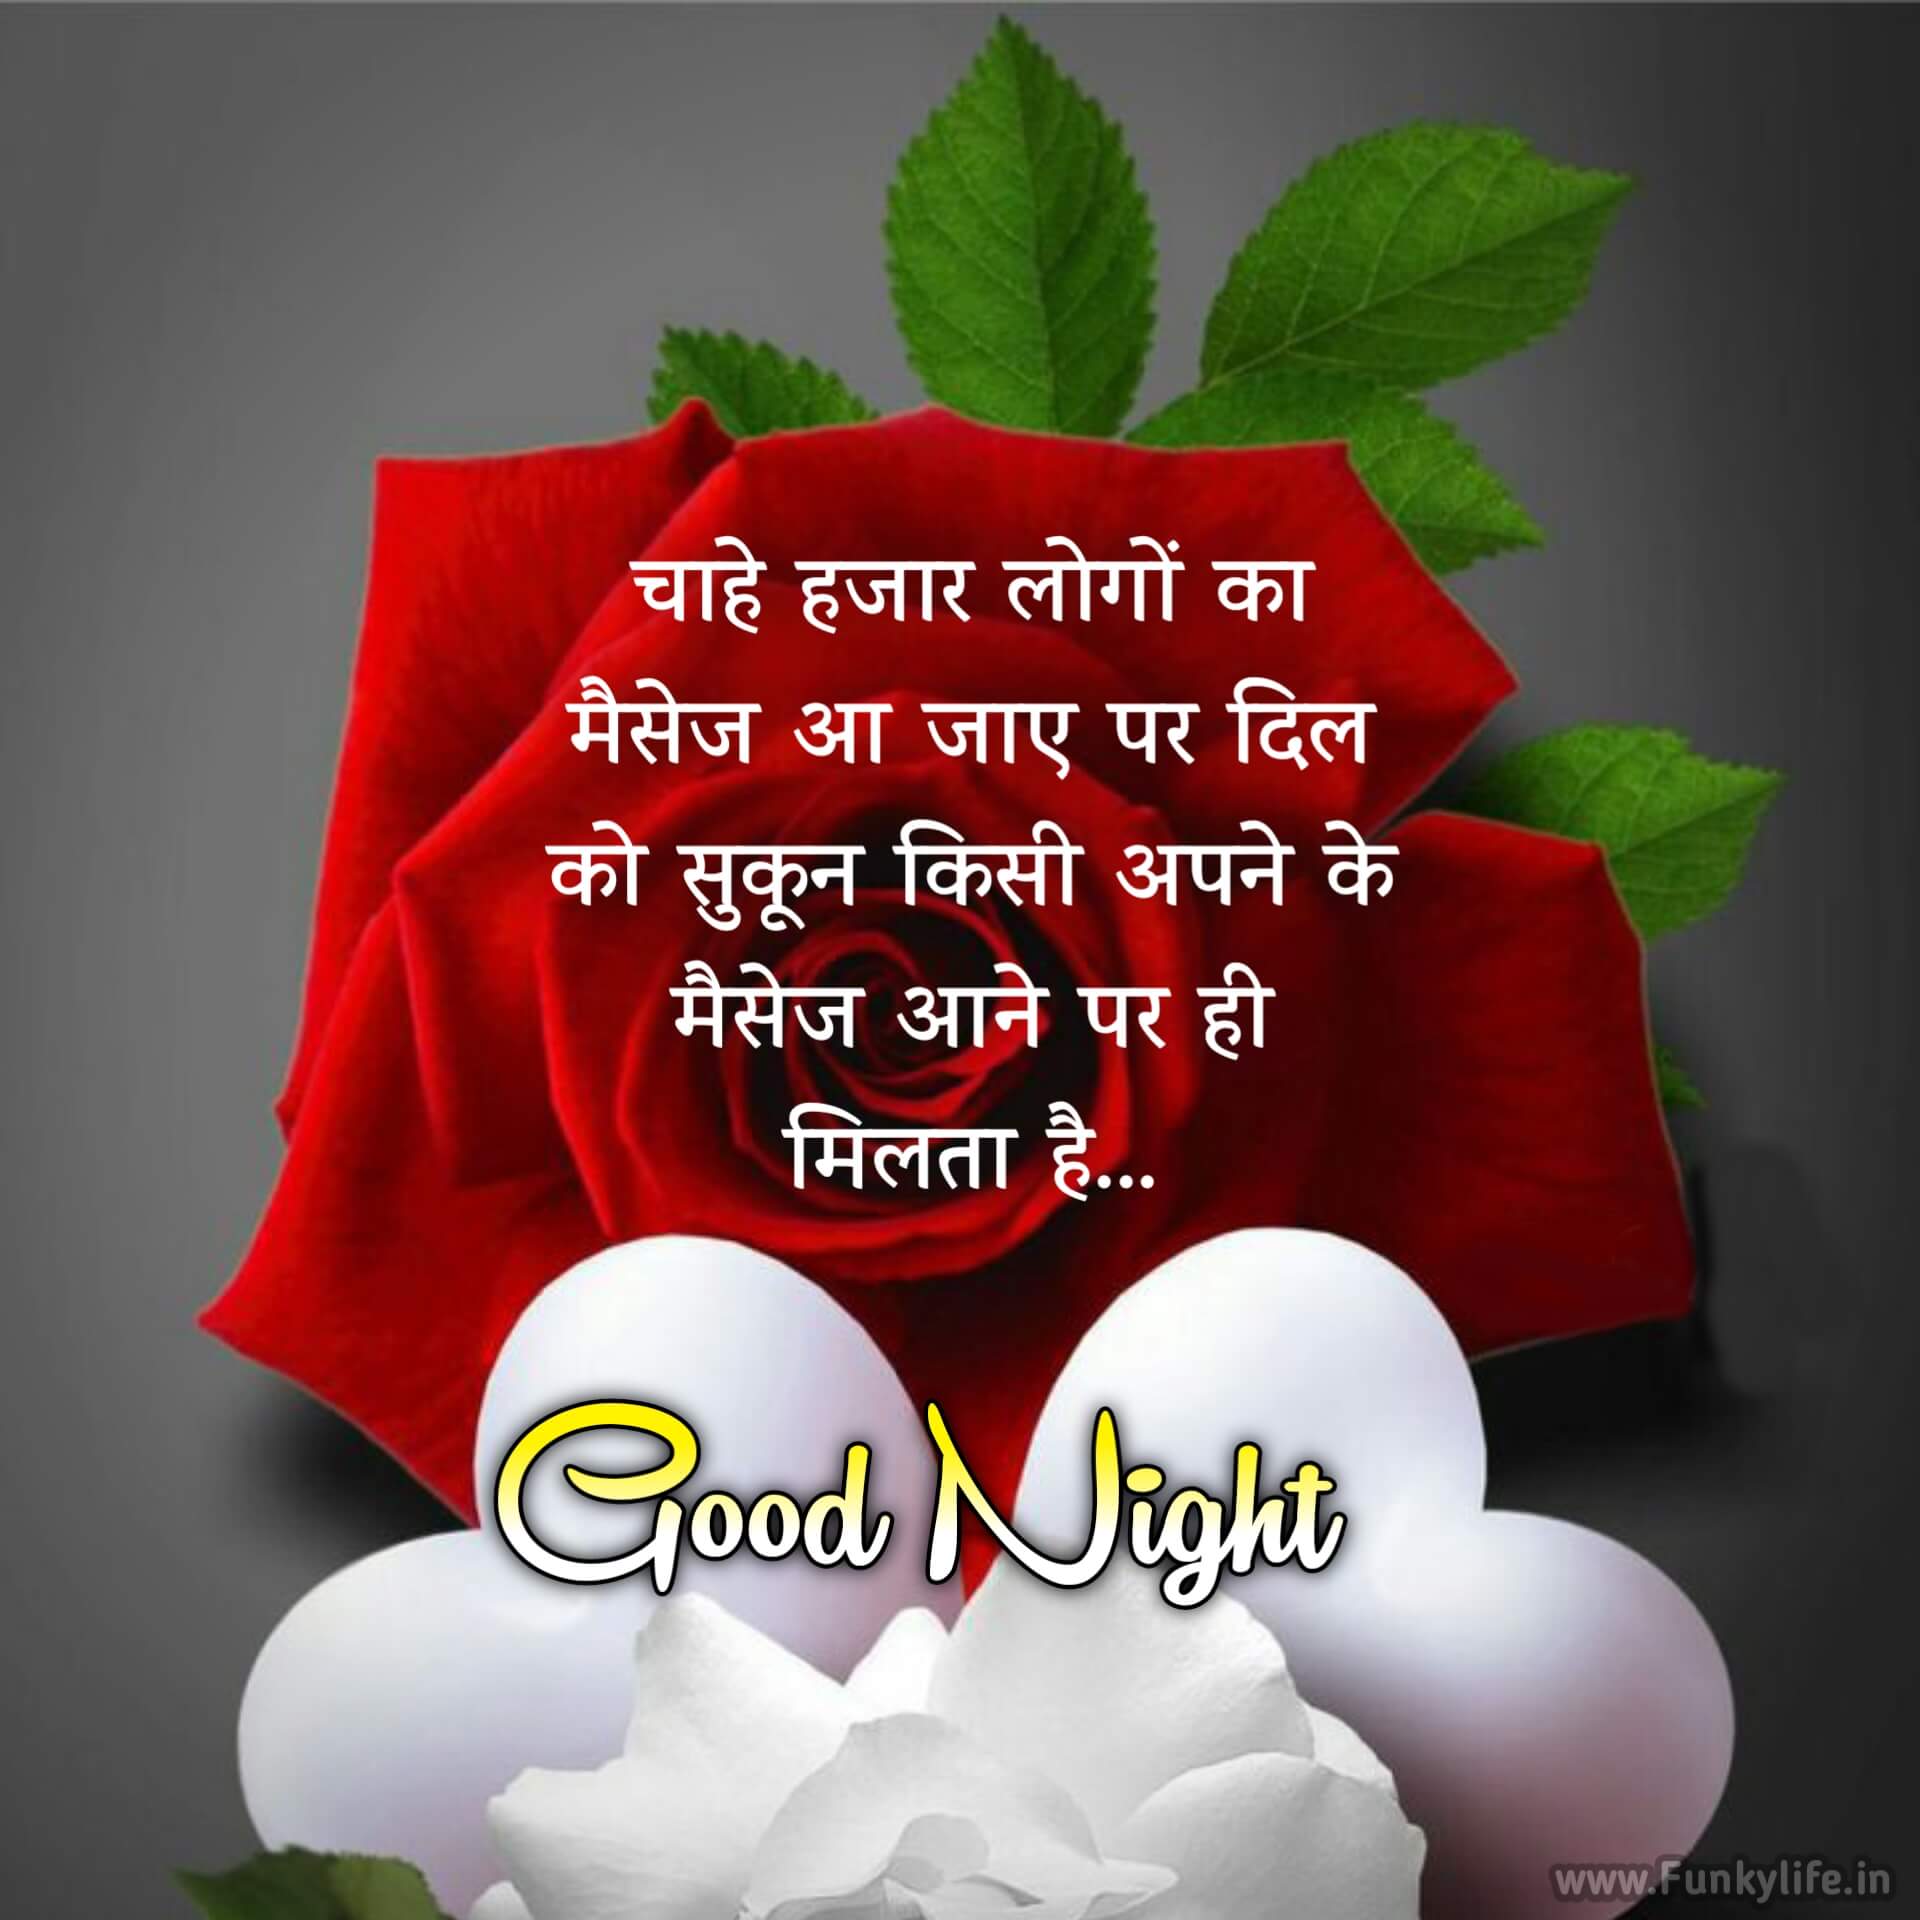 Hindi Good Night Image